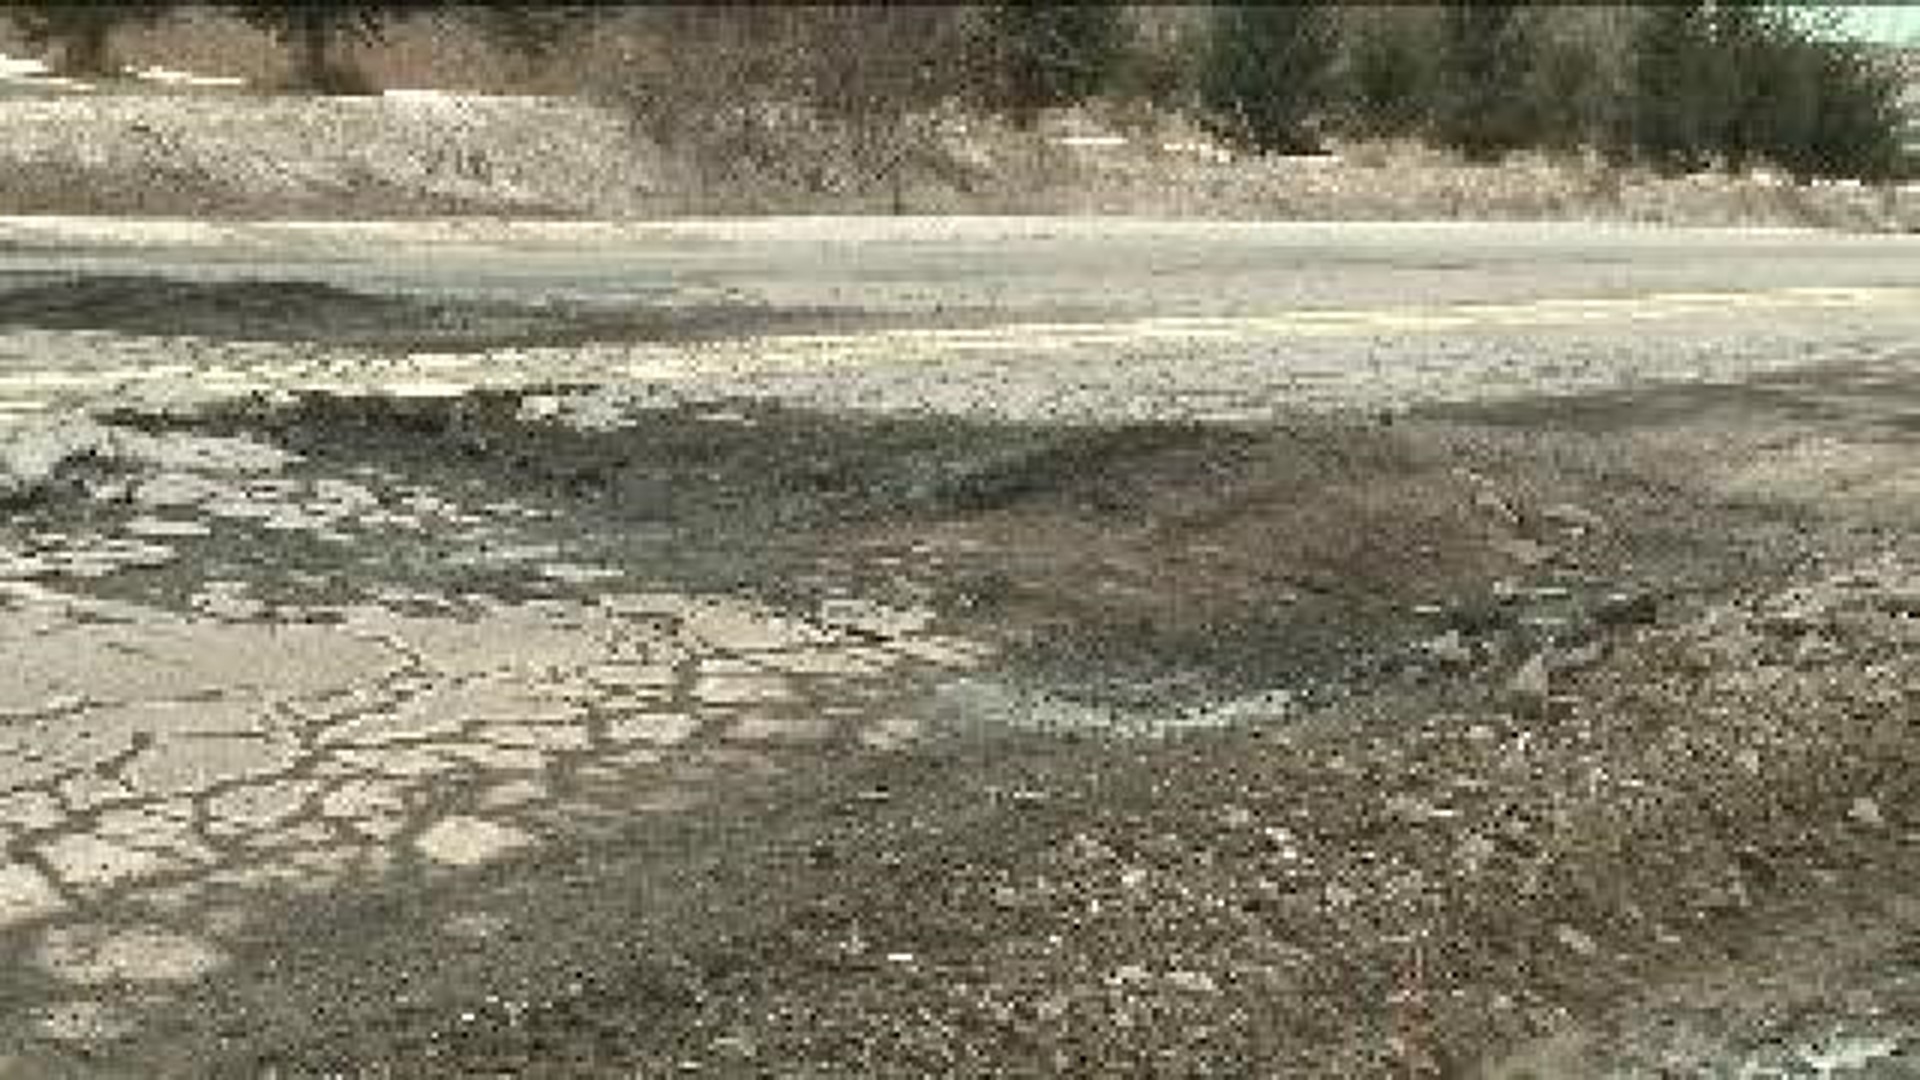 Route 547 Is Crumbling, Repairs Pending